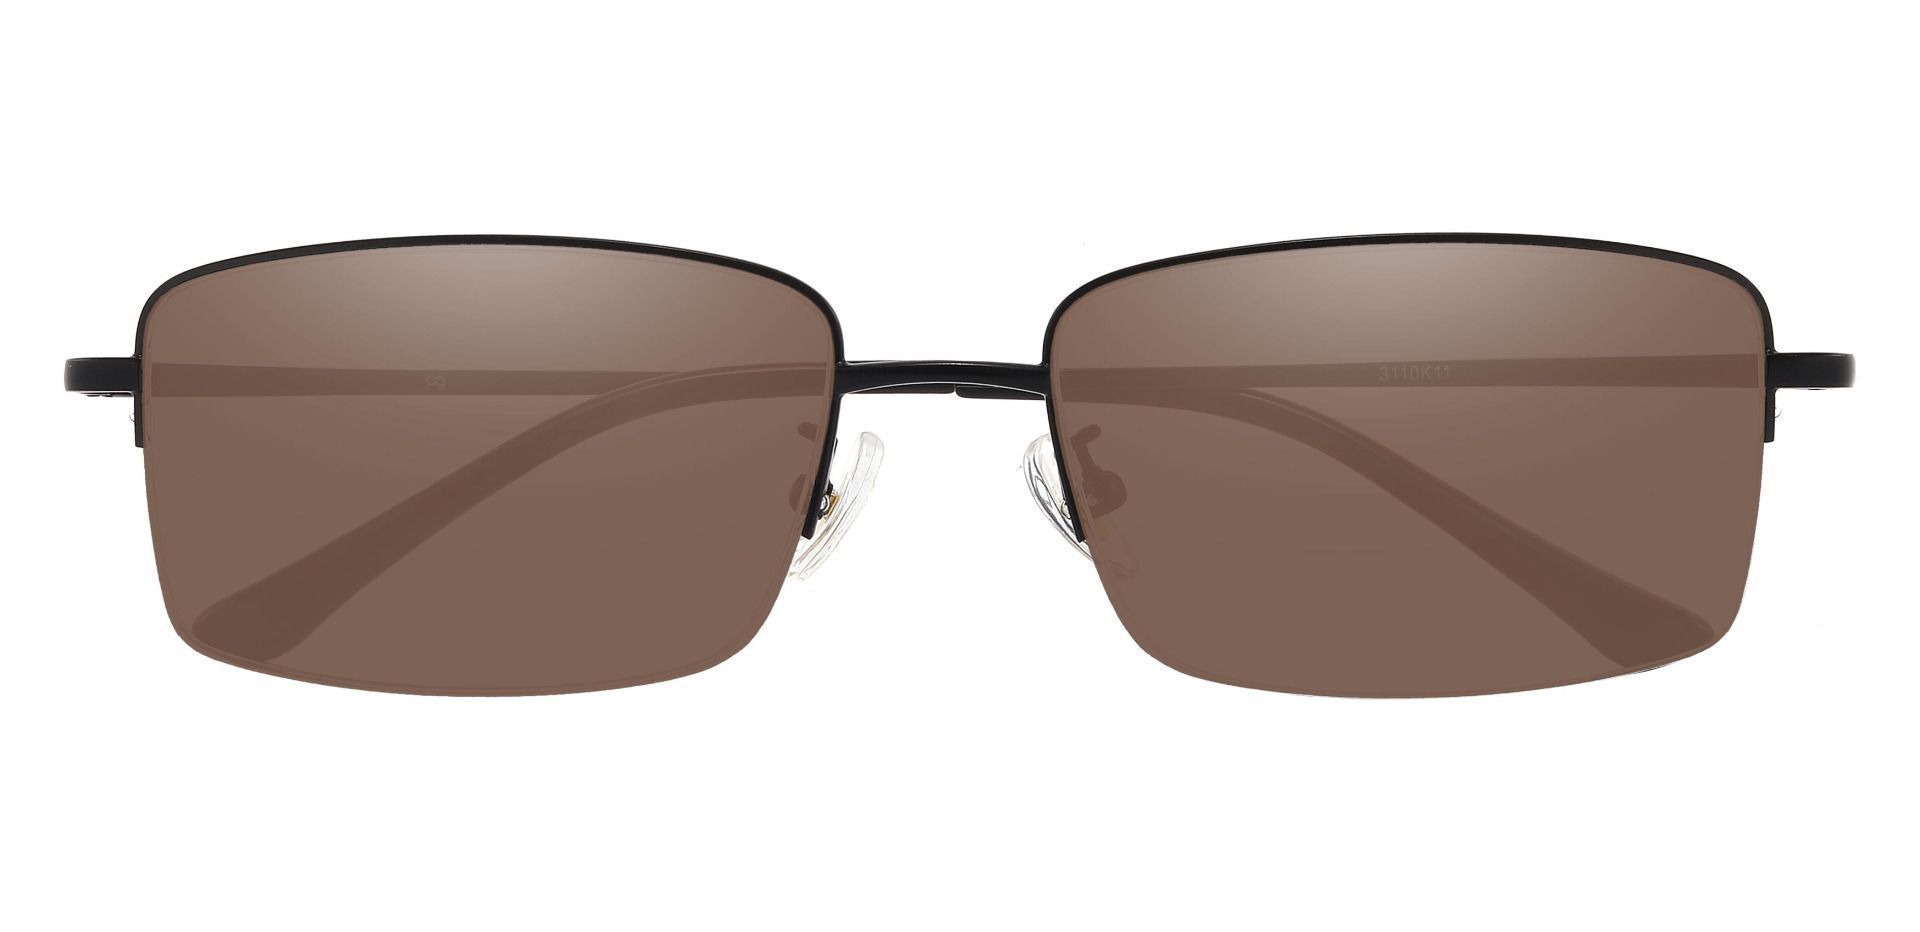 Bellmont Rectangle Prescription Sunglasses - Black Frame With Brown Lenses